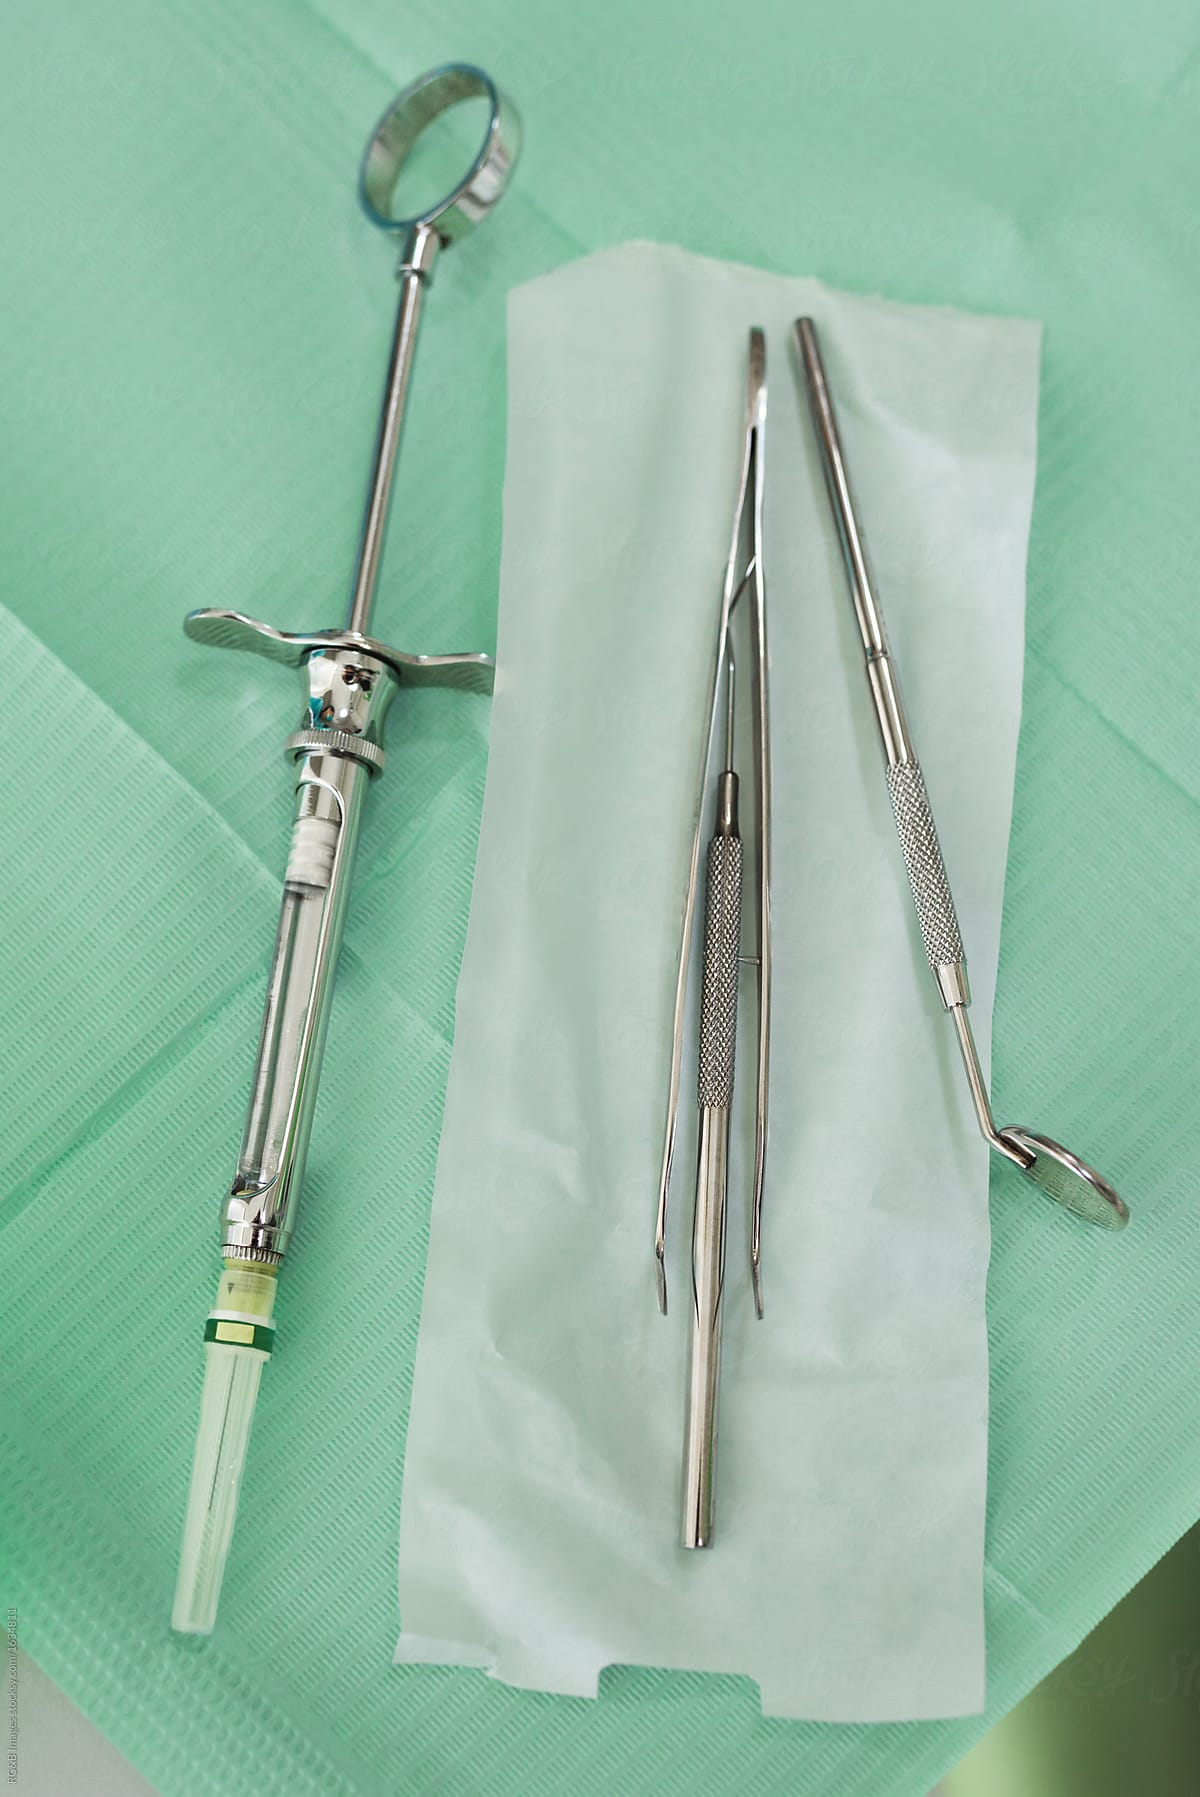 Stainless steel instruments prepared for dental intervention